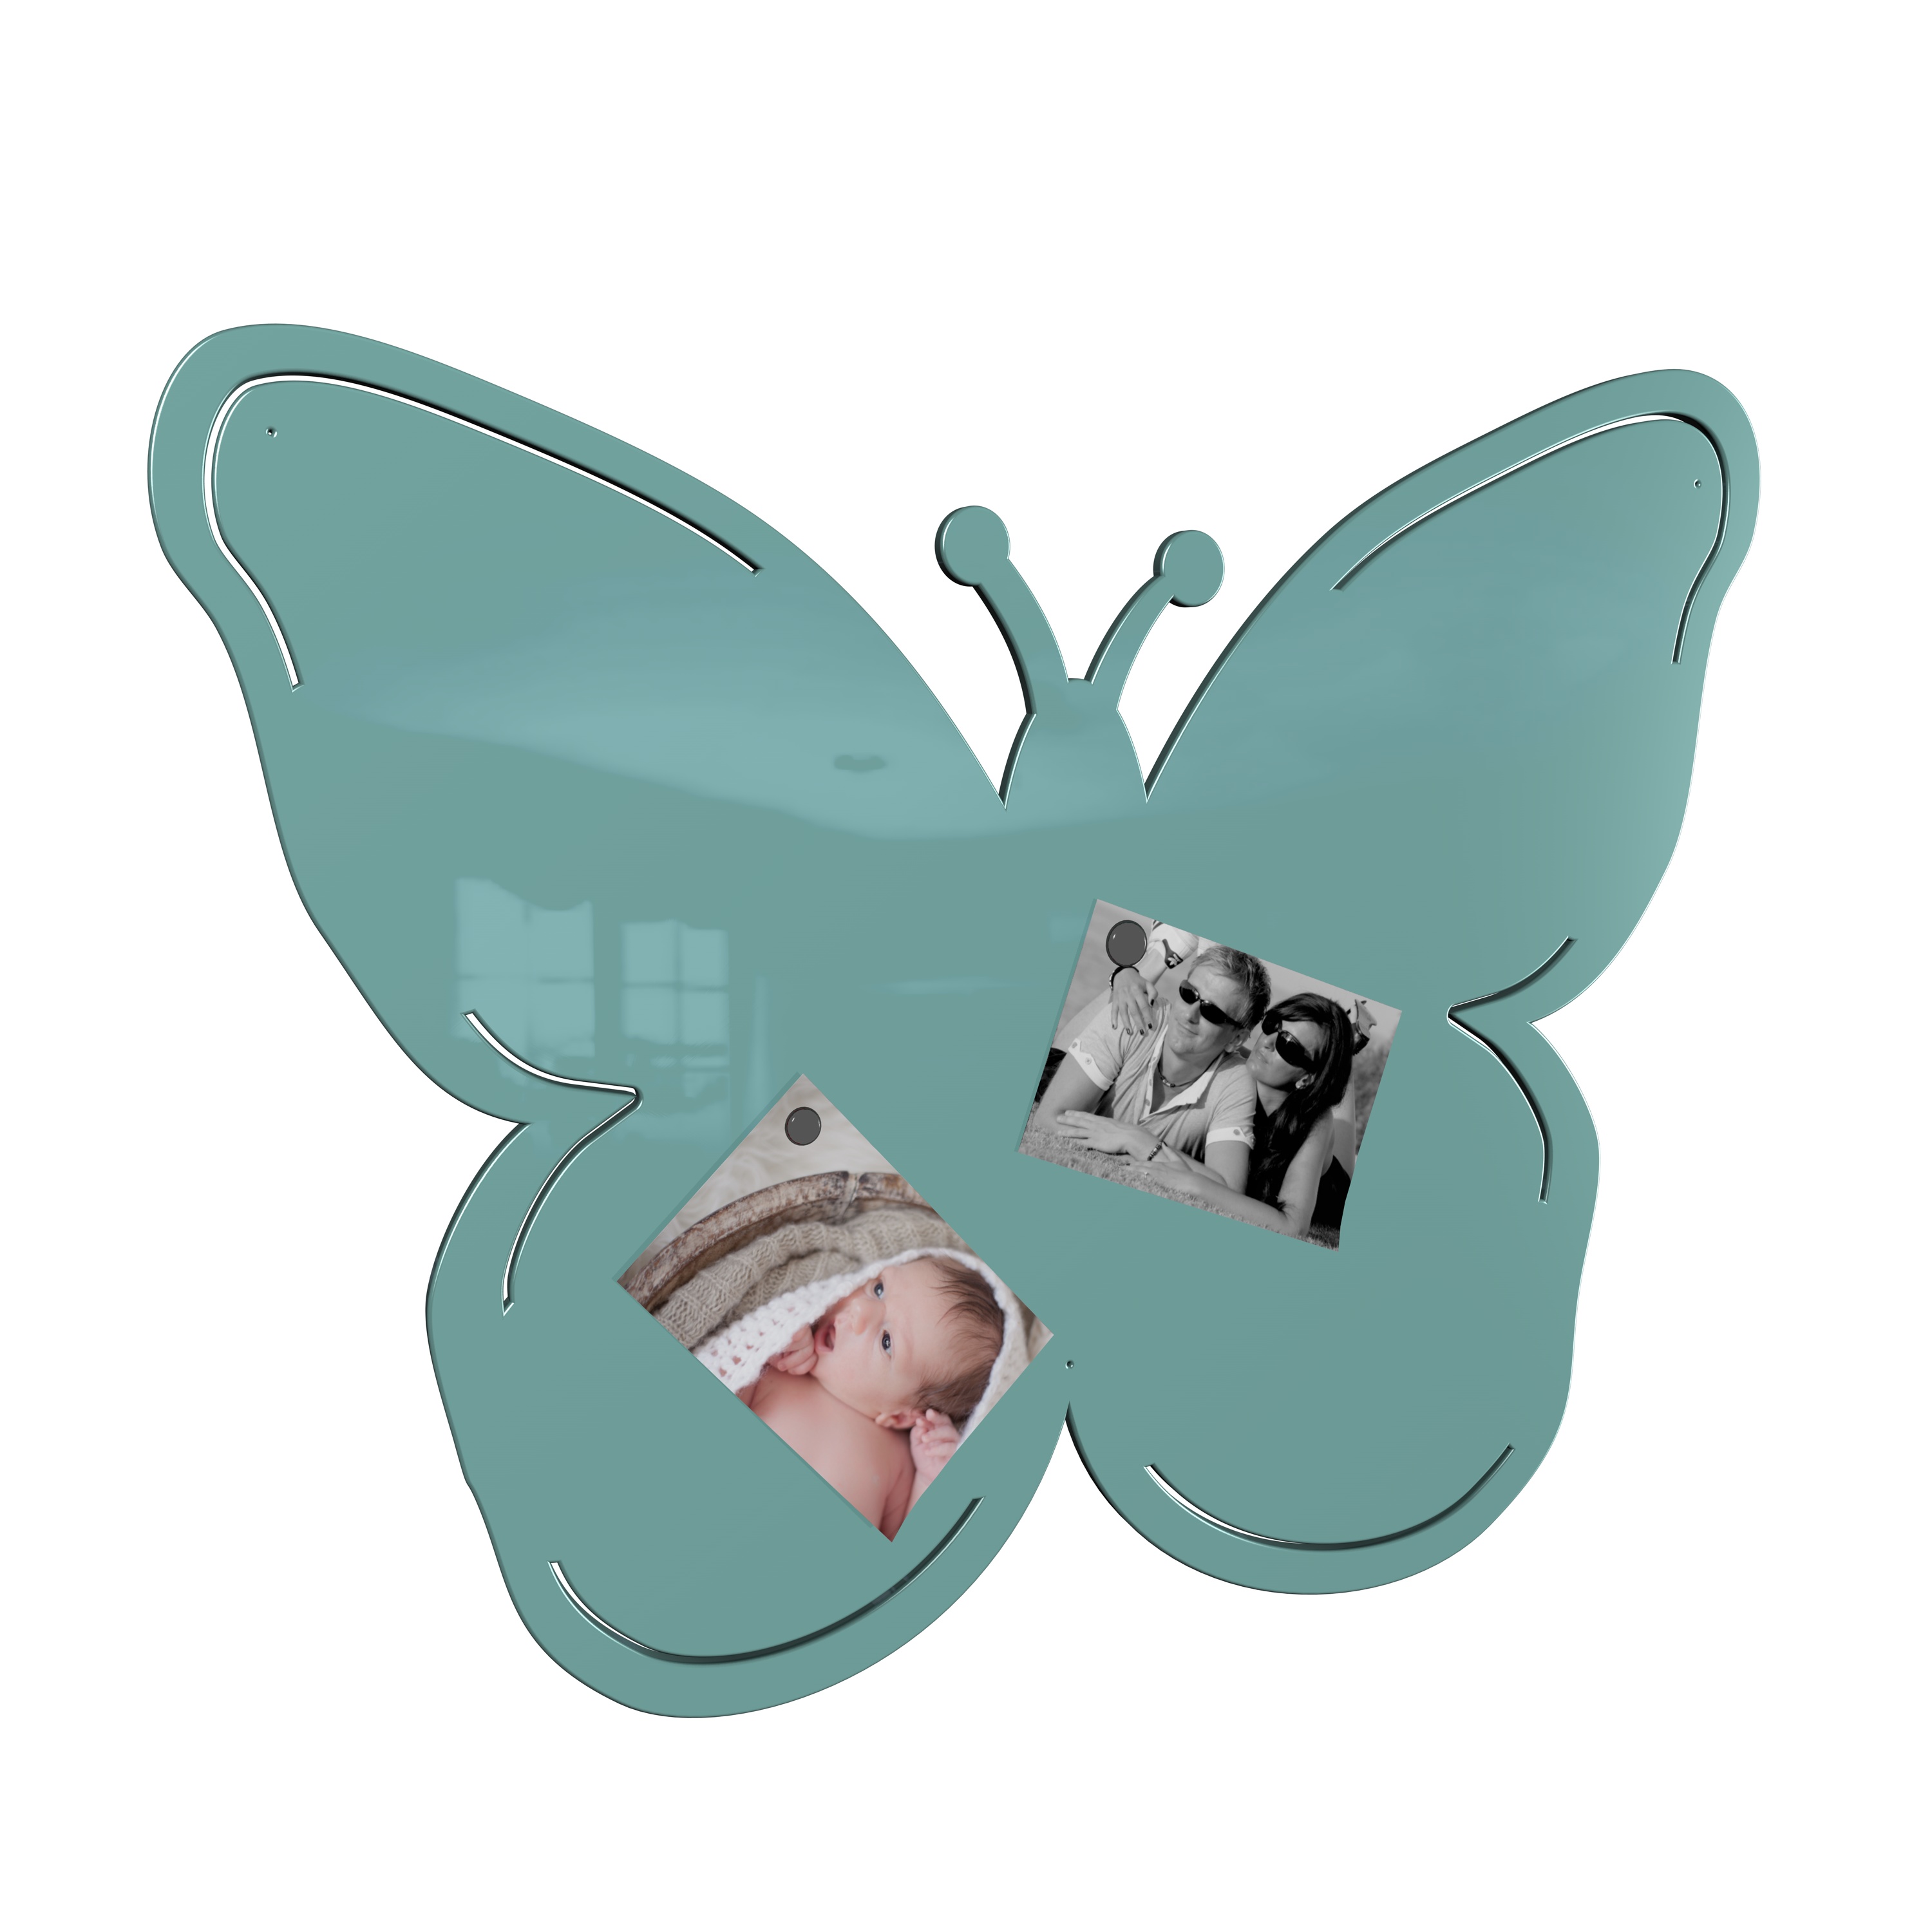 Magnetwand Magnettafel Memoboard - Schmetterling - RAL 6027 lichtgrün türkis